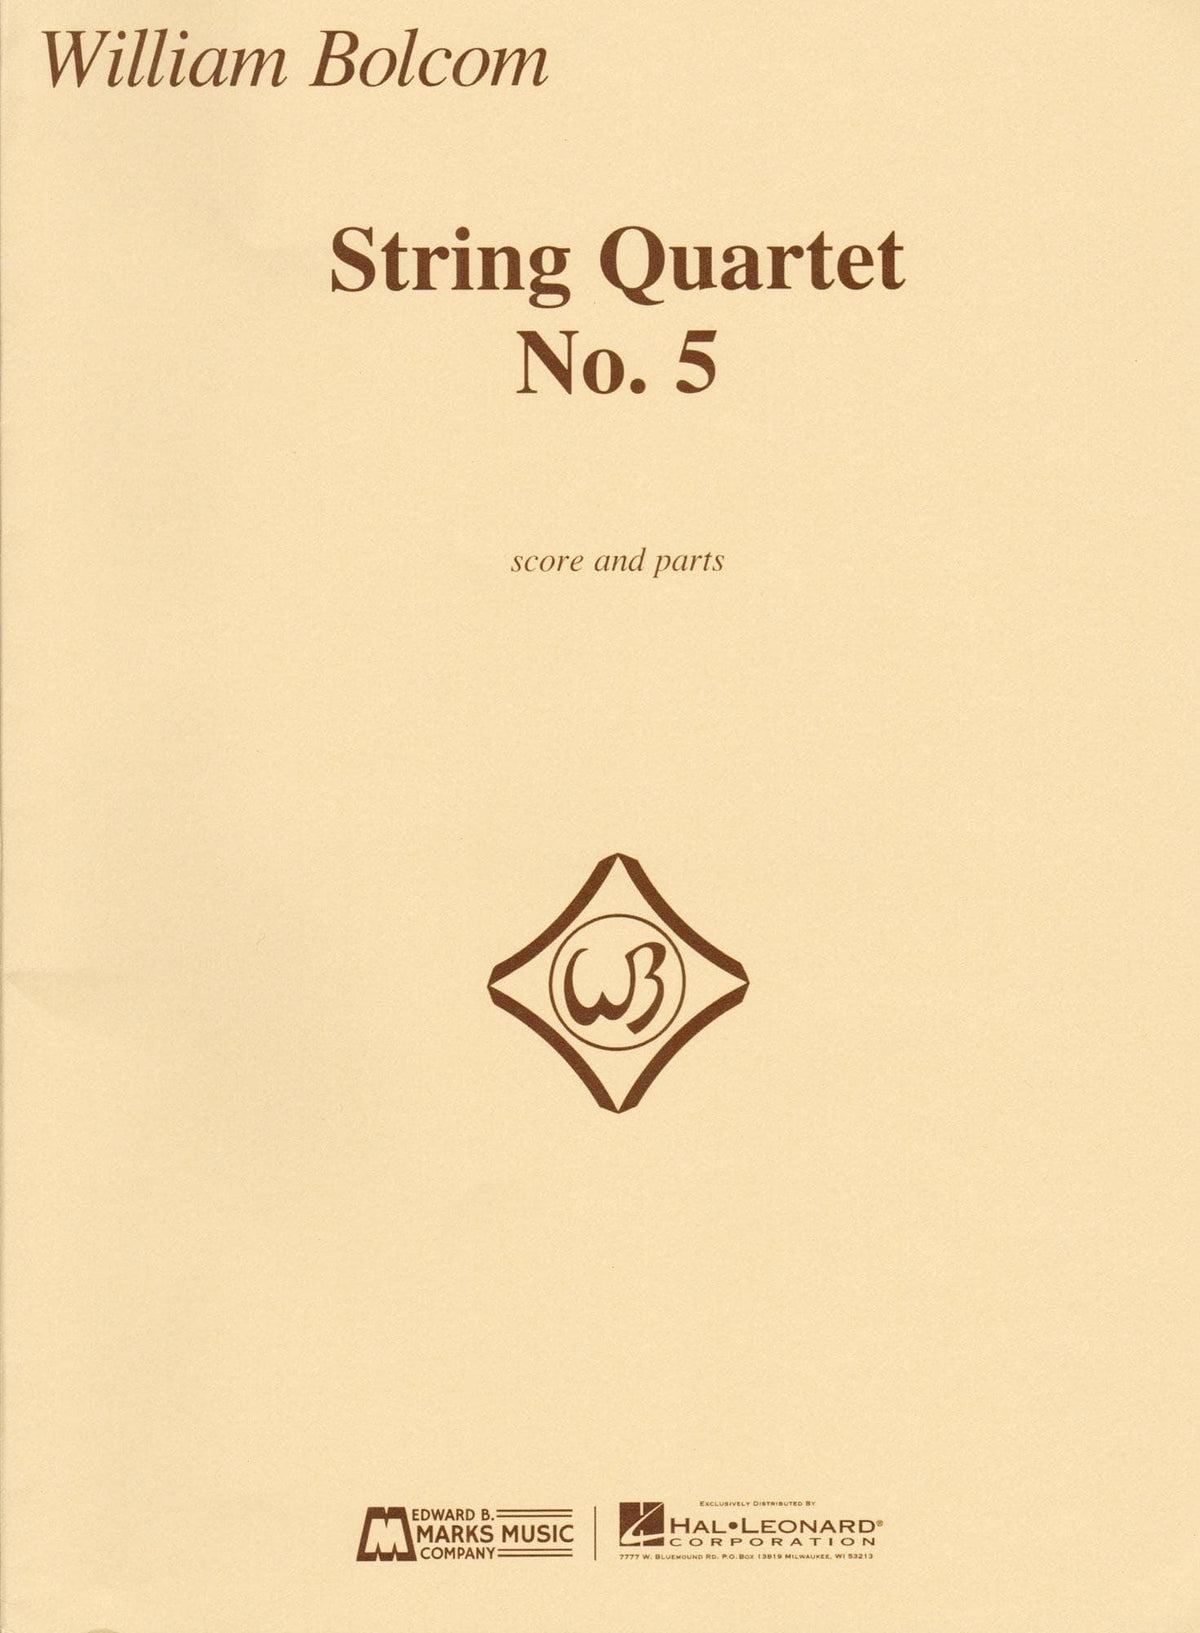 Bolcom, William - String Quartet No. 5 - Score and Parts - Edward B. Marks Music Company